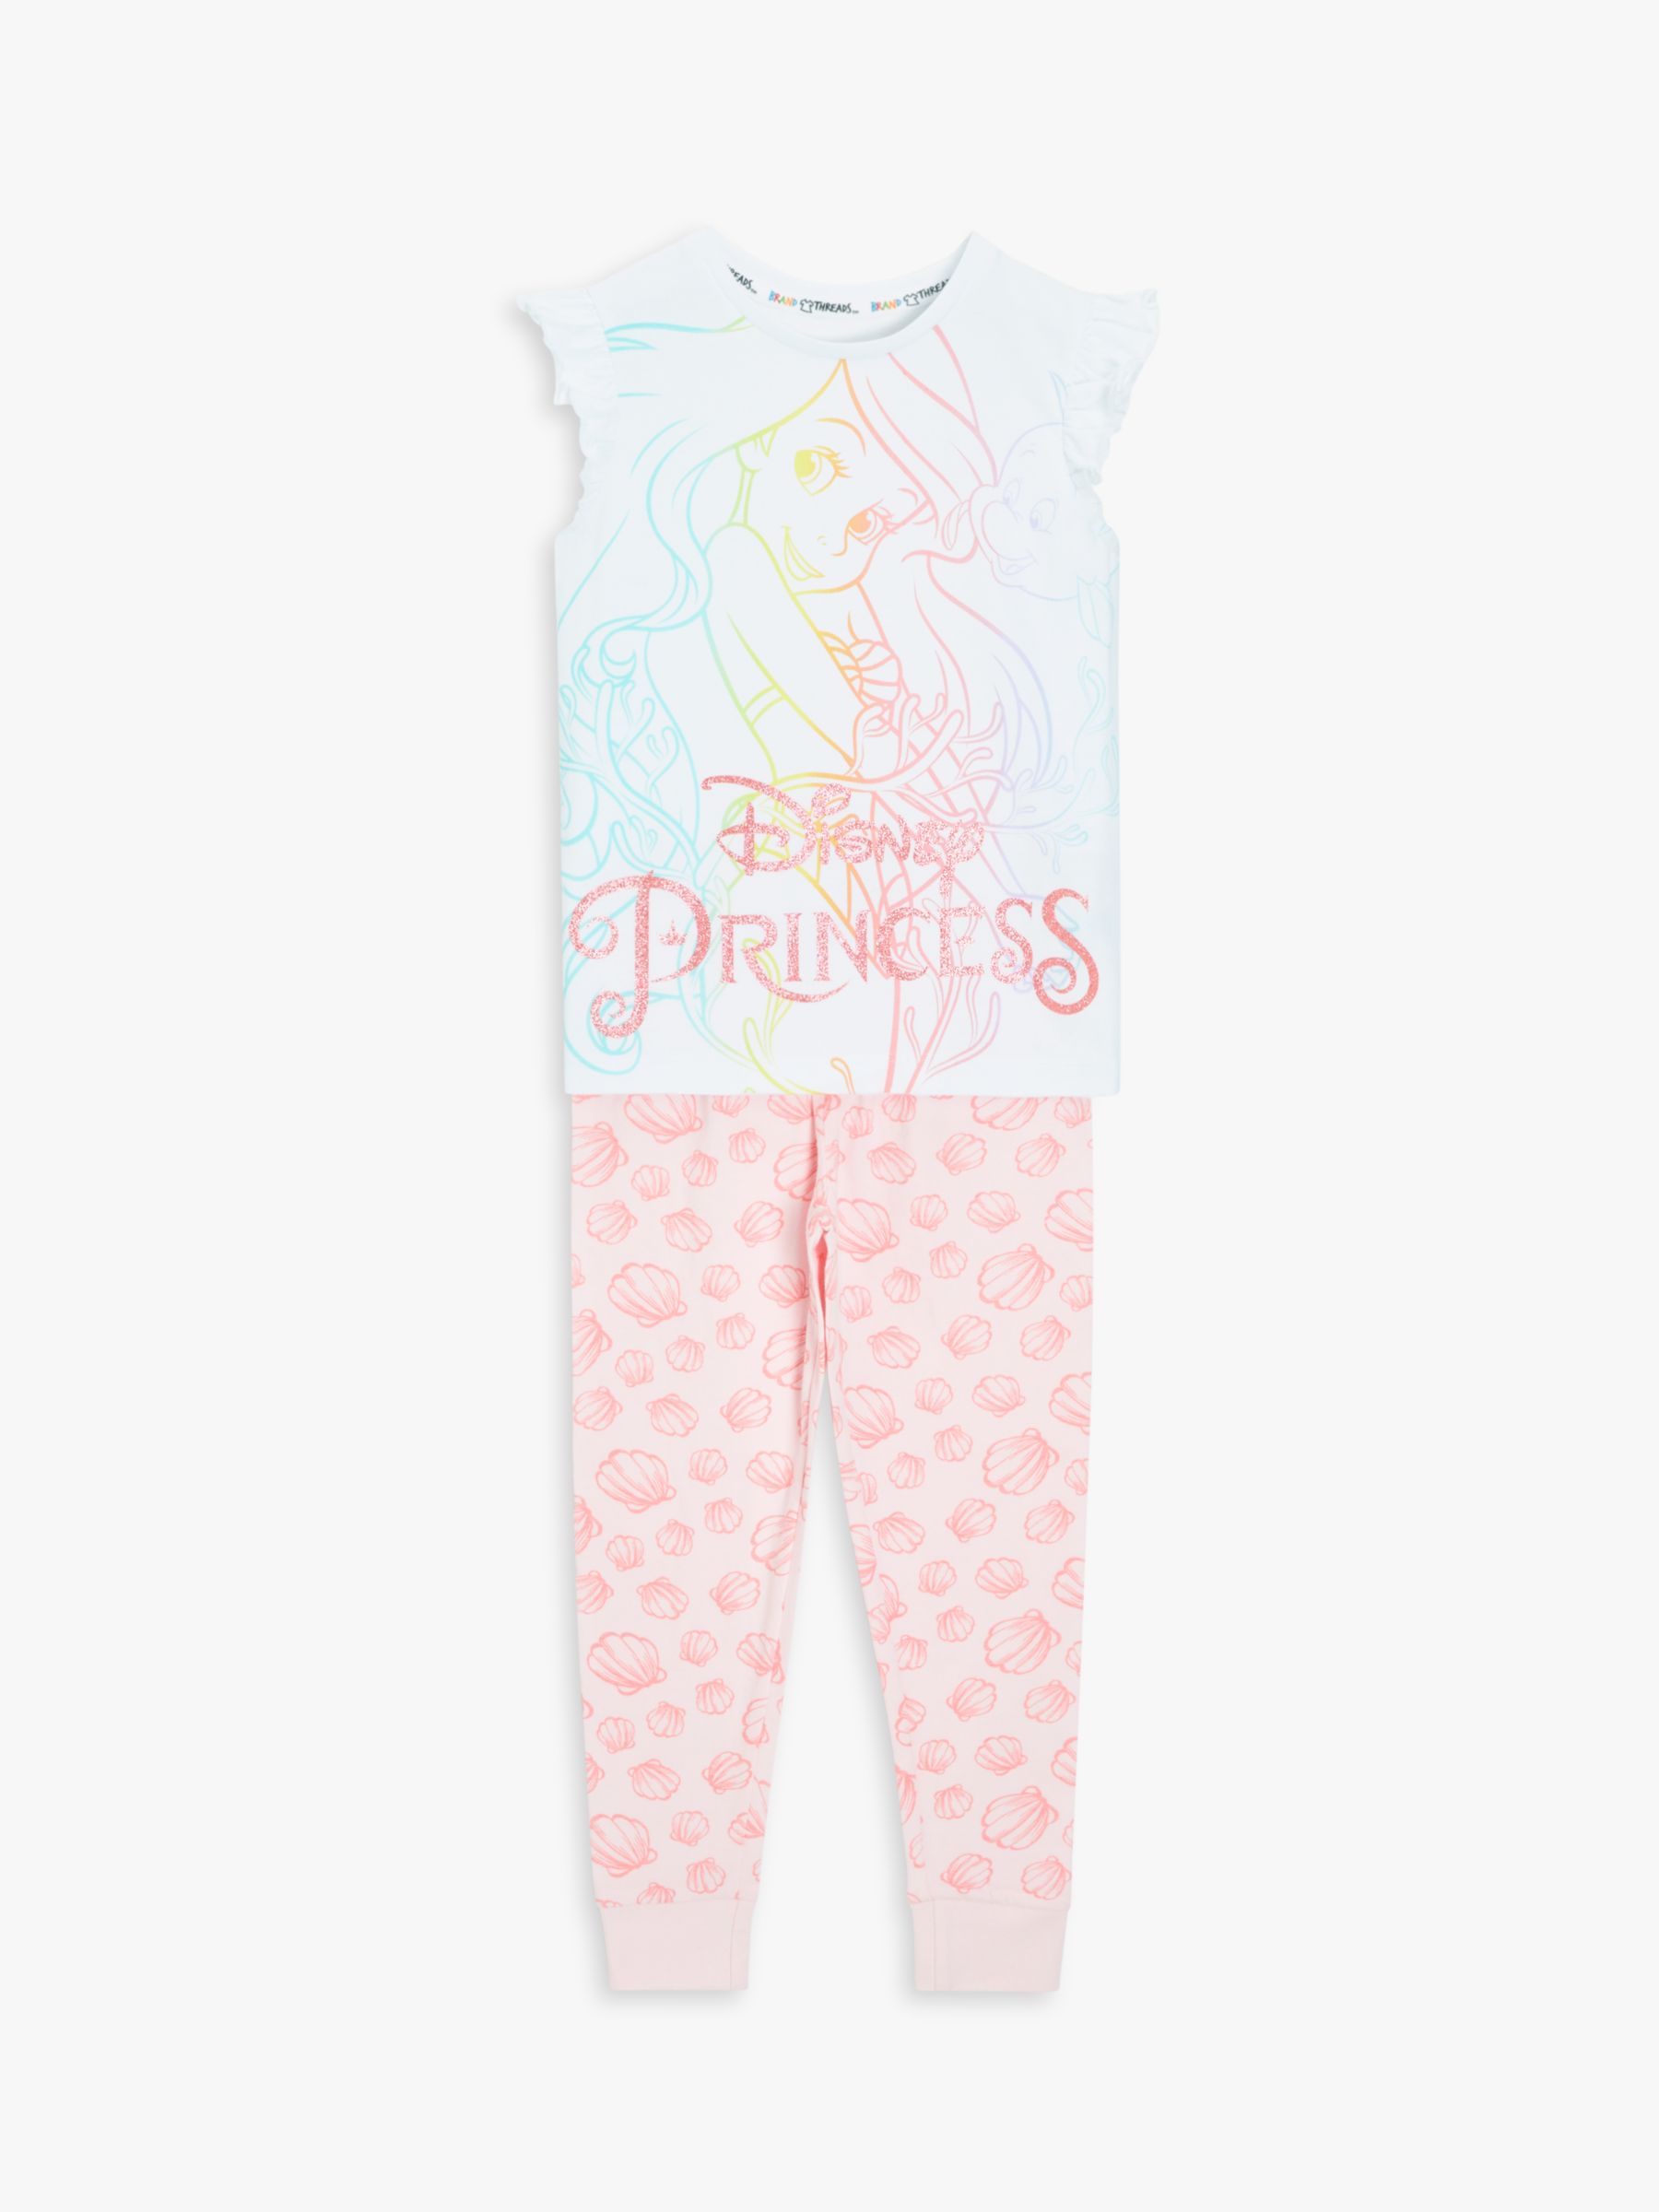 Official Disney Princess Nightwear